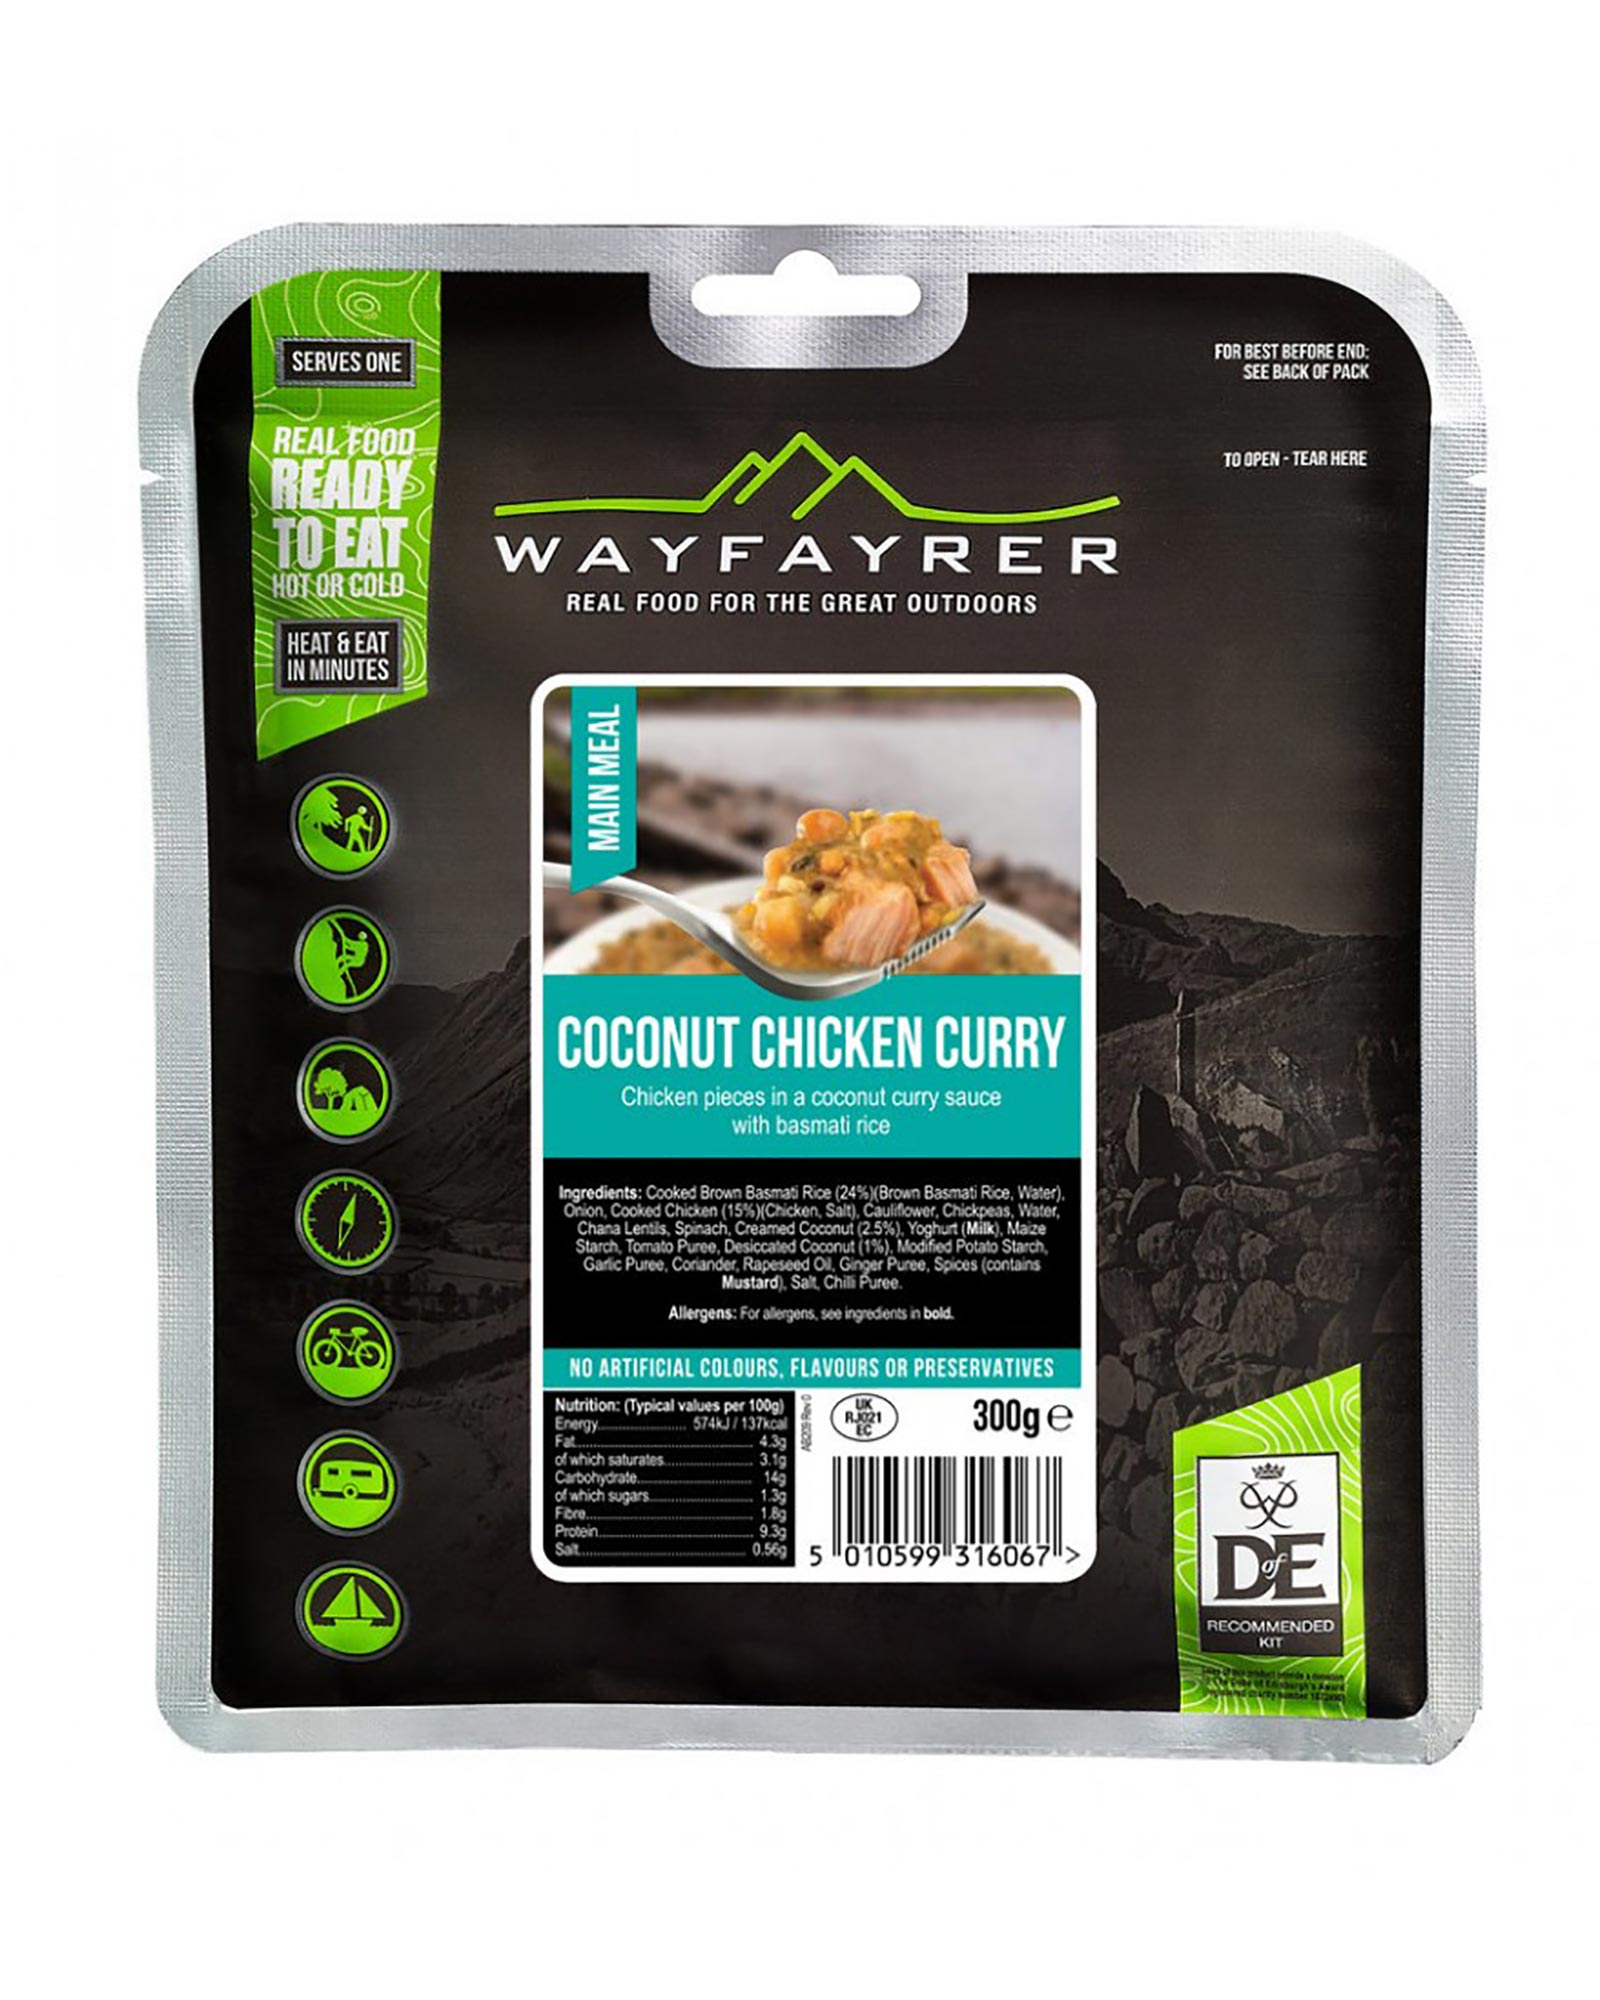 Wayfayrer Coconut Chicken Curry